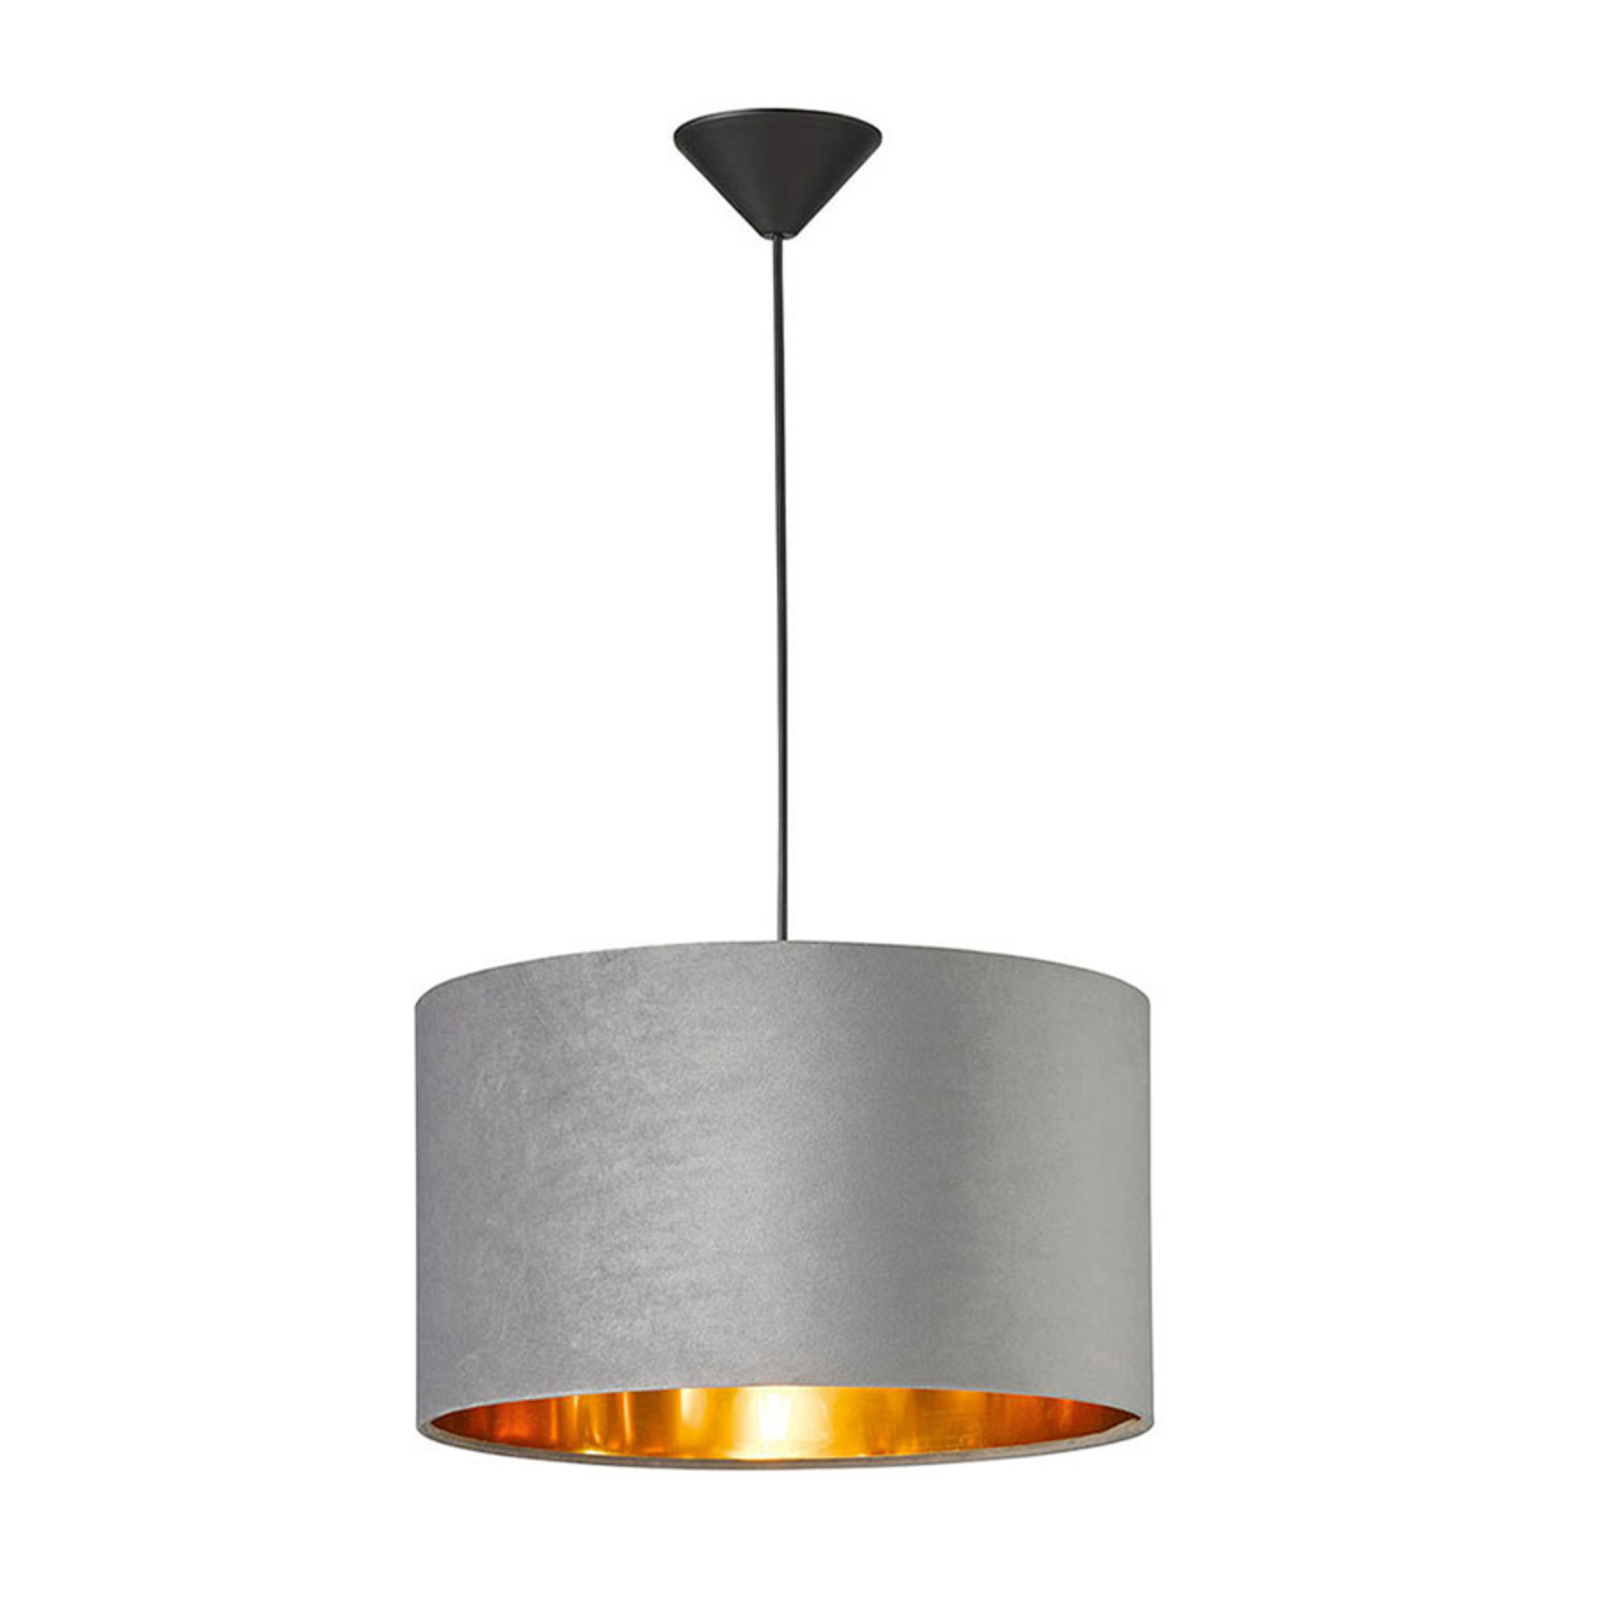 Hanglamp Aura met fluwelen kap, Ø 40 cm, grijs